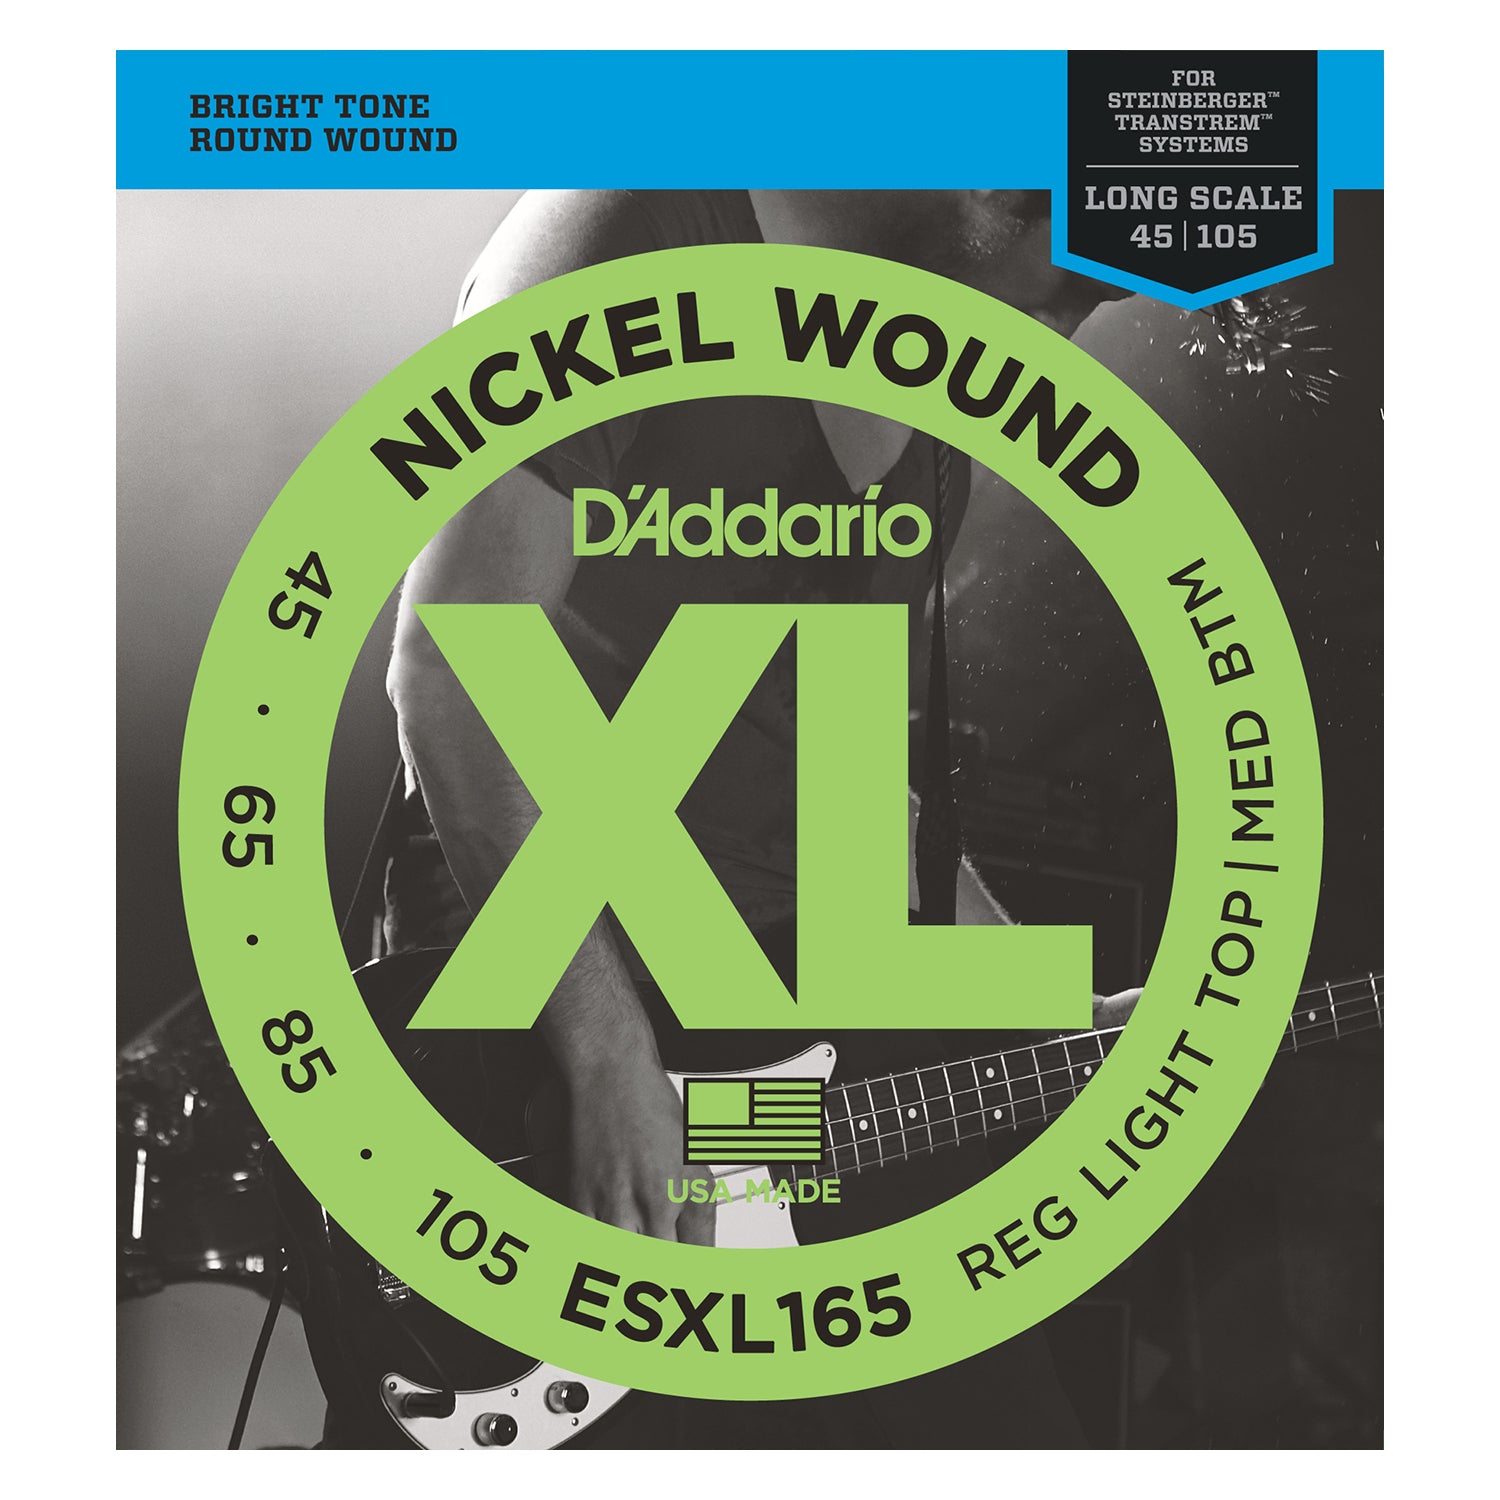 D'Addario ESXL165 Nickel Wound Bass Guitar Strings, Medium, 50-105, Double Ball End, Long Scale